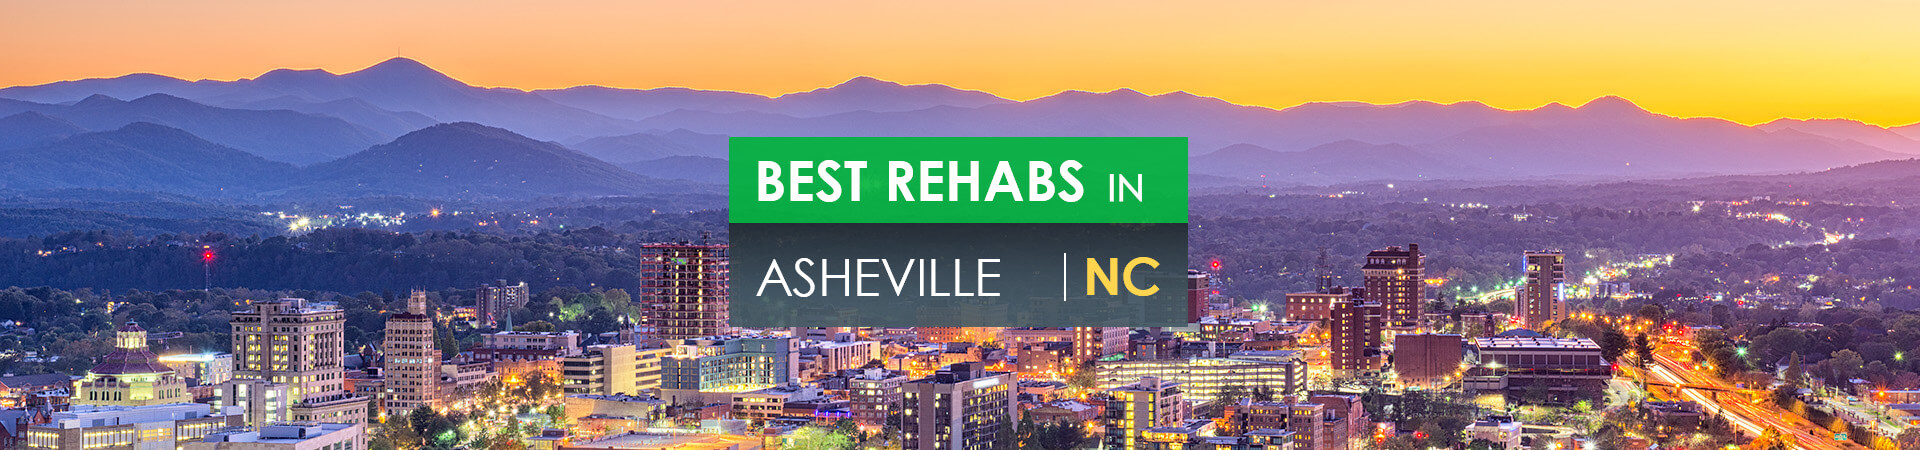 Best rehabs in Asheville, NC